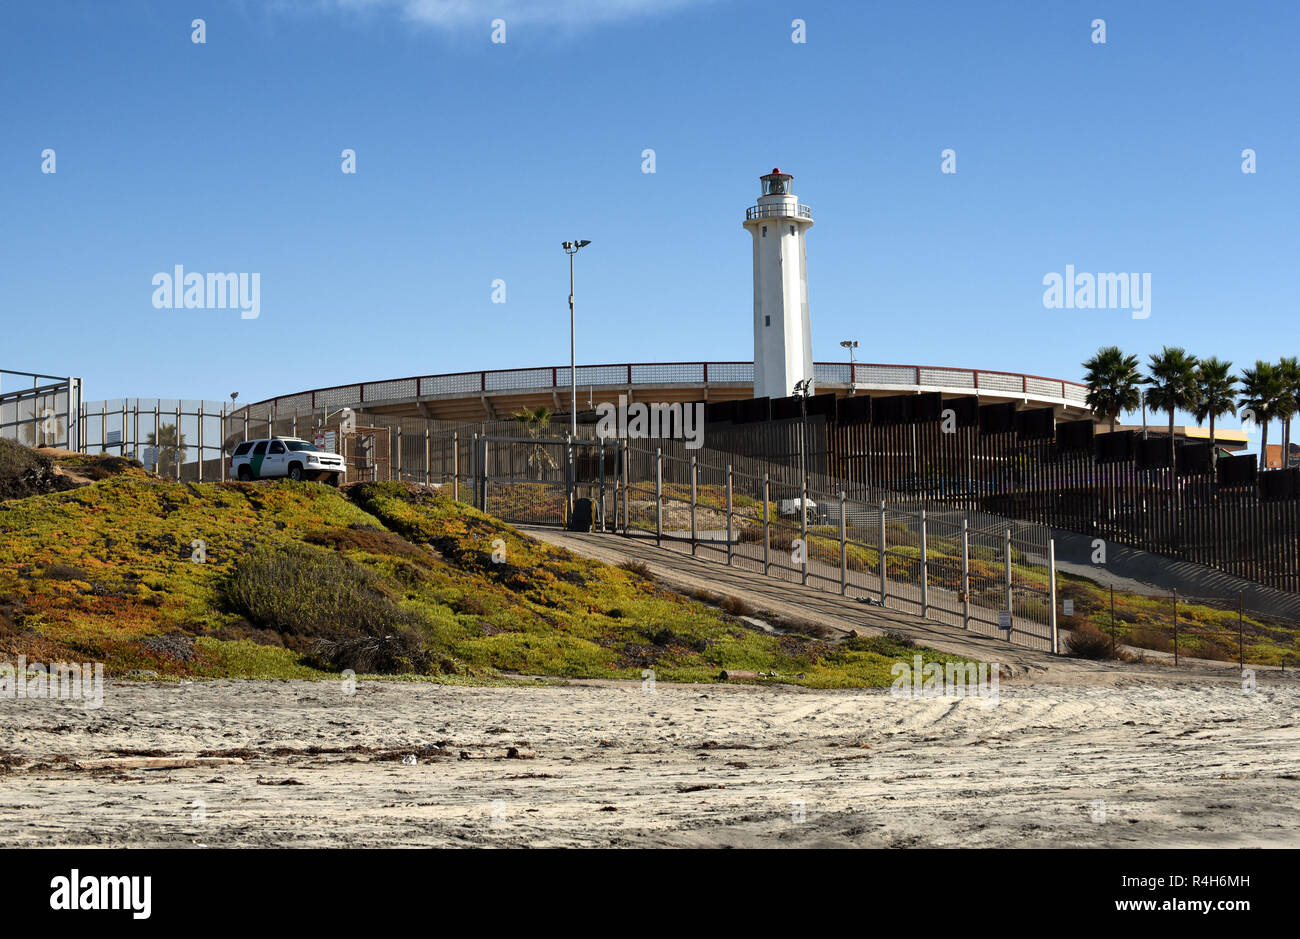 SAN YSIDRO, CALIFORNIA - NOVEMBER 26, 2018: The USA Mexico Border Wall and Border Patrol Vehicle from Imperial Beach looking towards the International Stock Photo